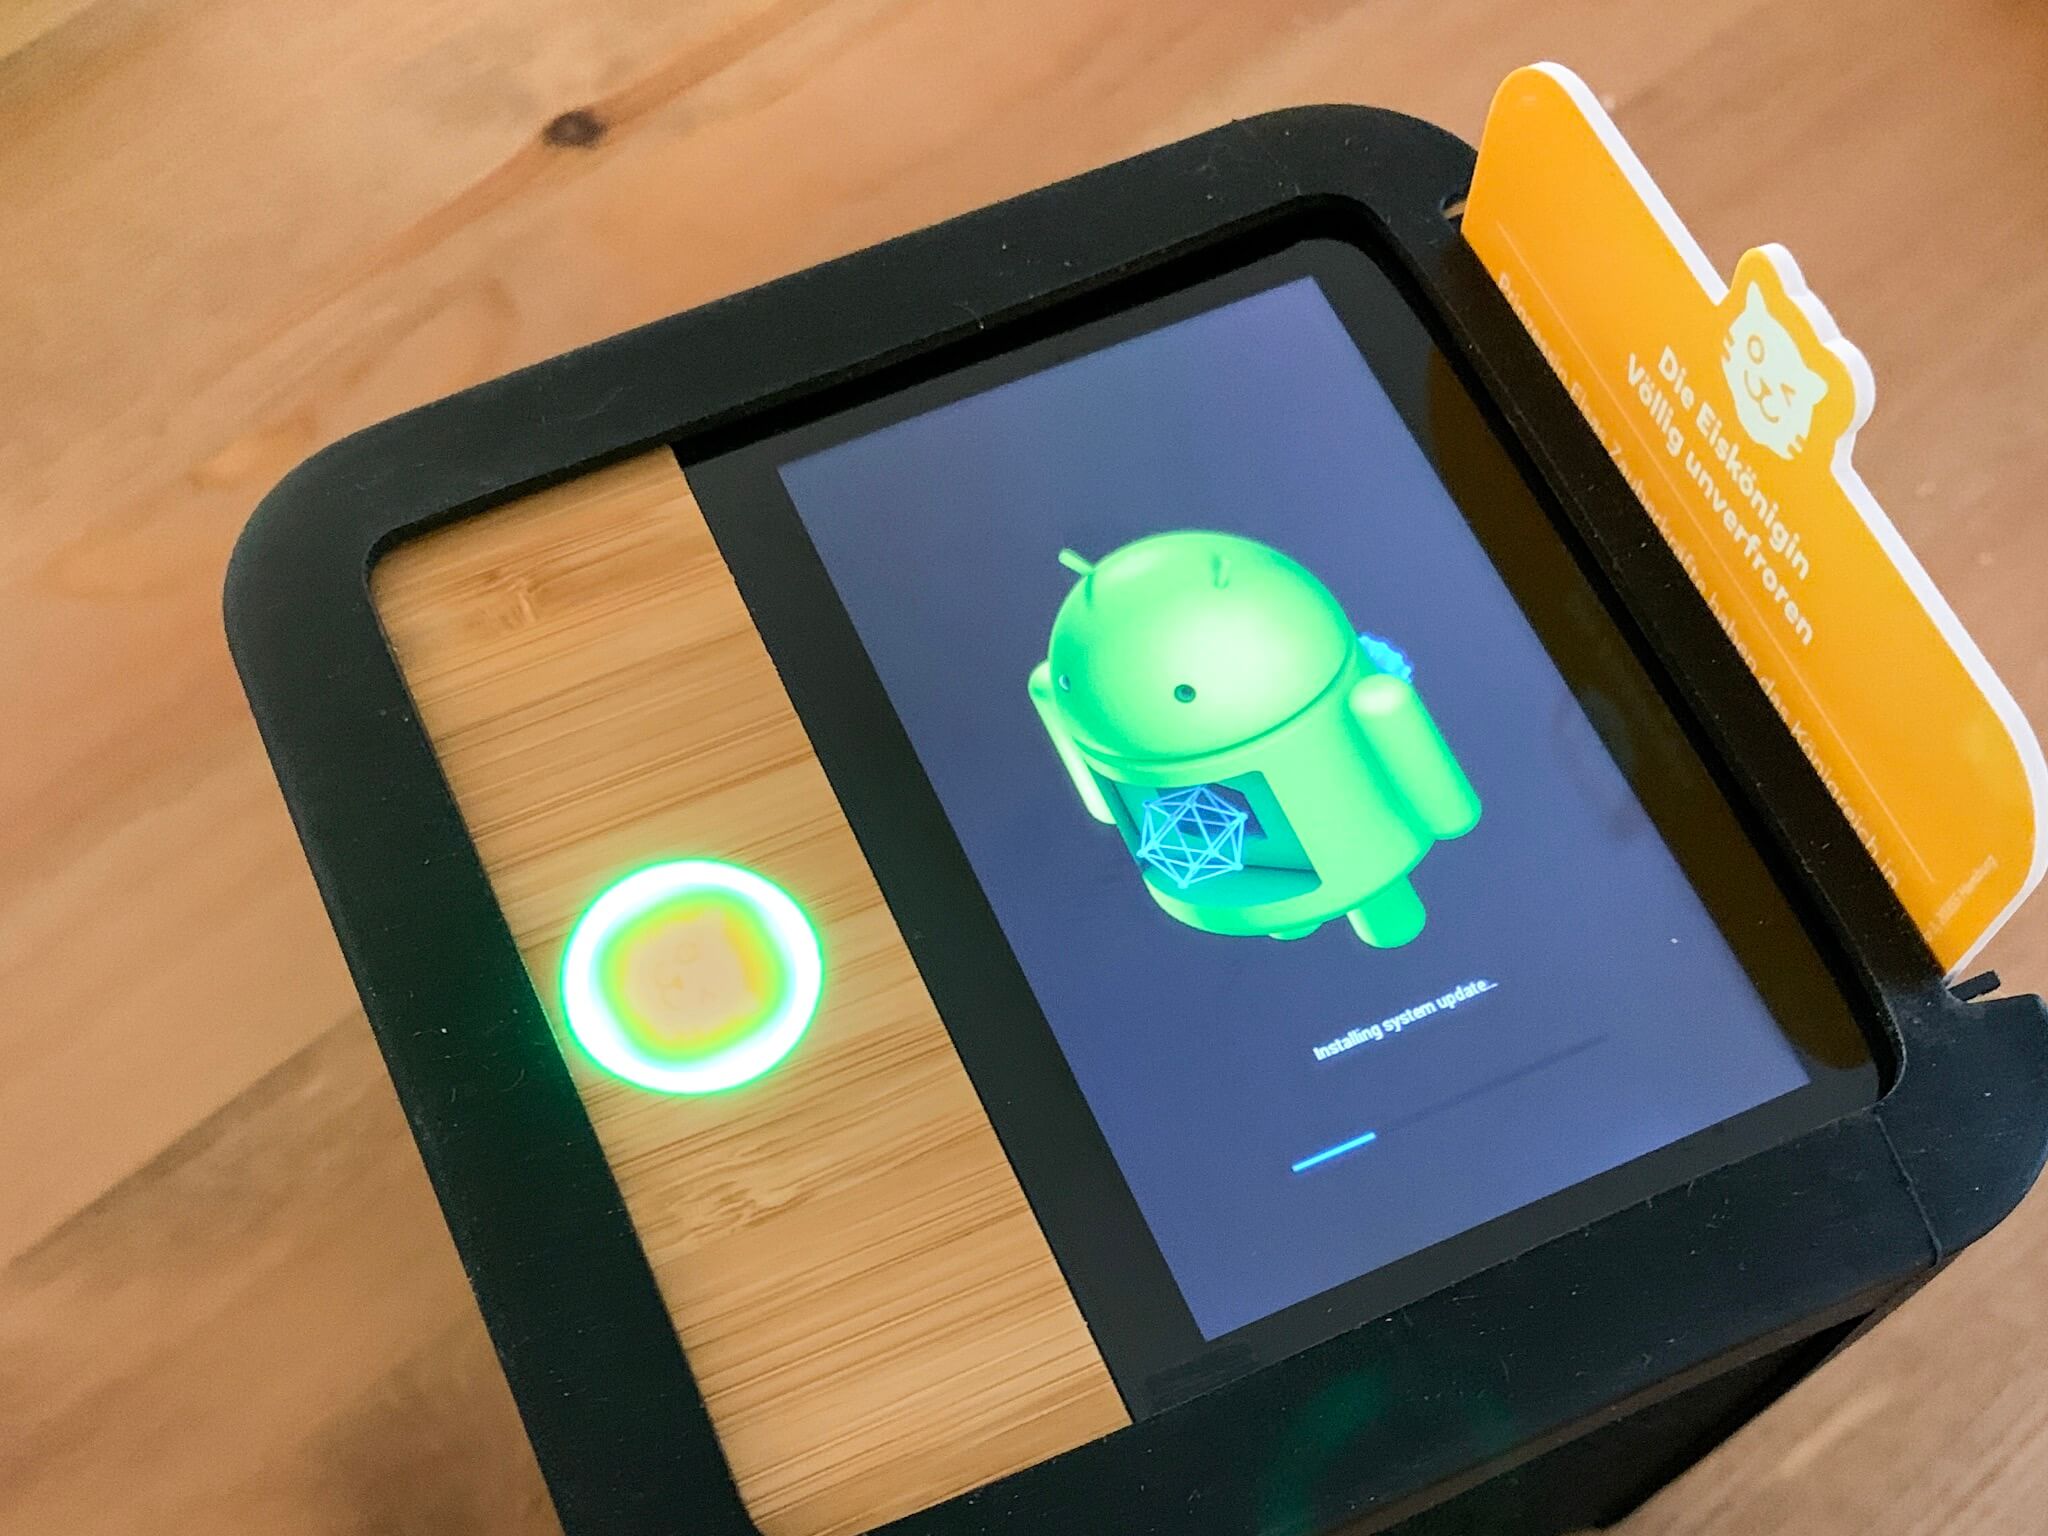 Touchscreen der Tigerbox Touch während Updates des Android Betriebssystems